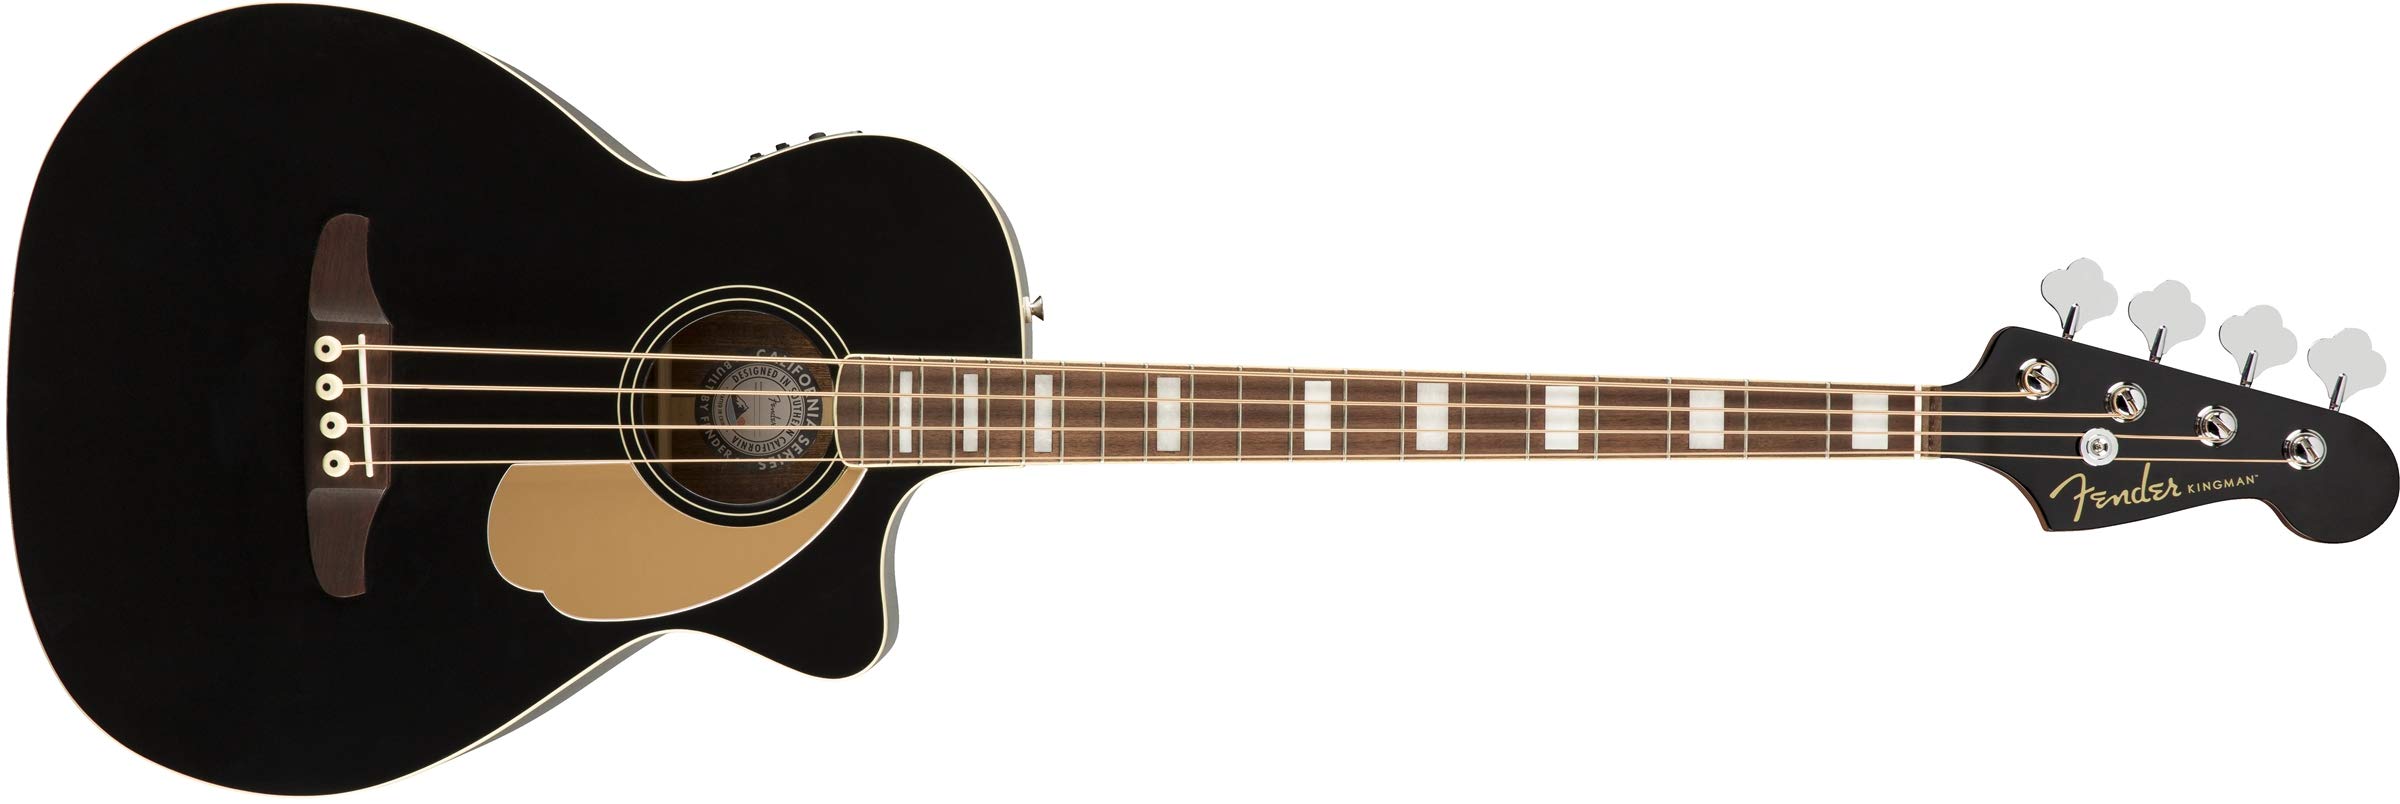 Fender Kingman アコースティック ベース ギター (V2) - ブラック - バッグ付き - ウ...